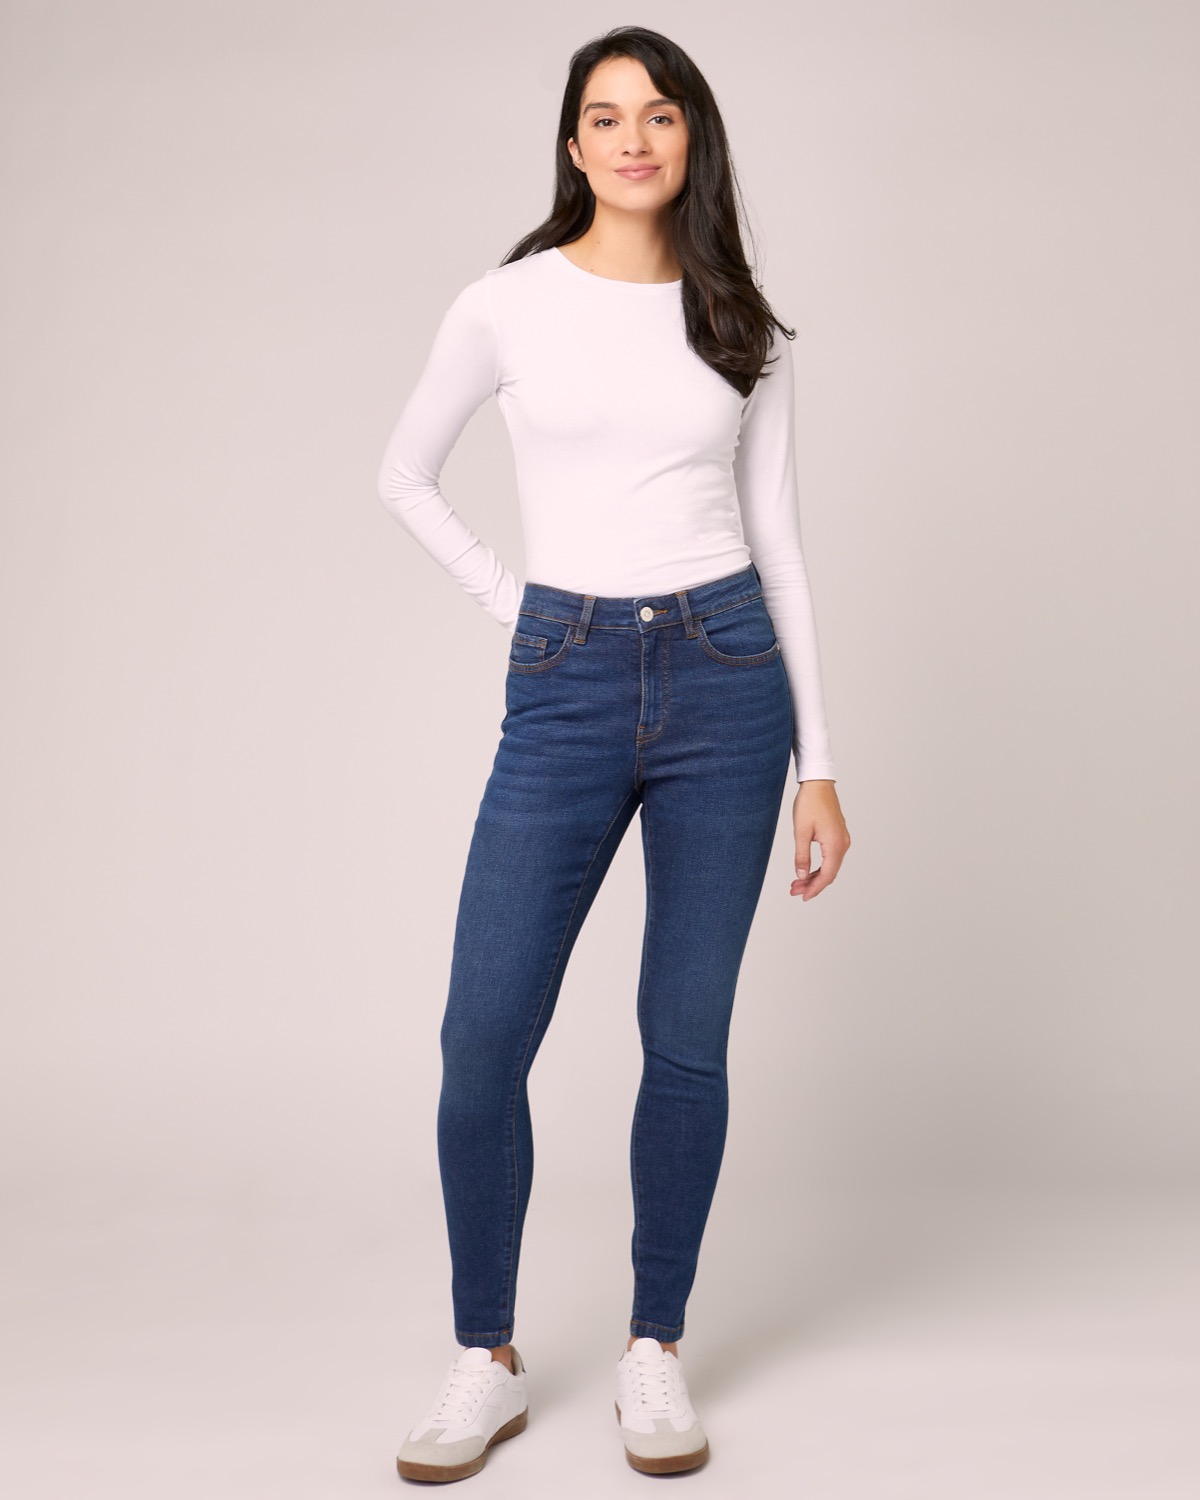 Women's Casual Corner Stretch Cotton/Poly/Spandx Denim Dress Jeans Size 16  